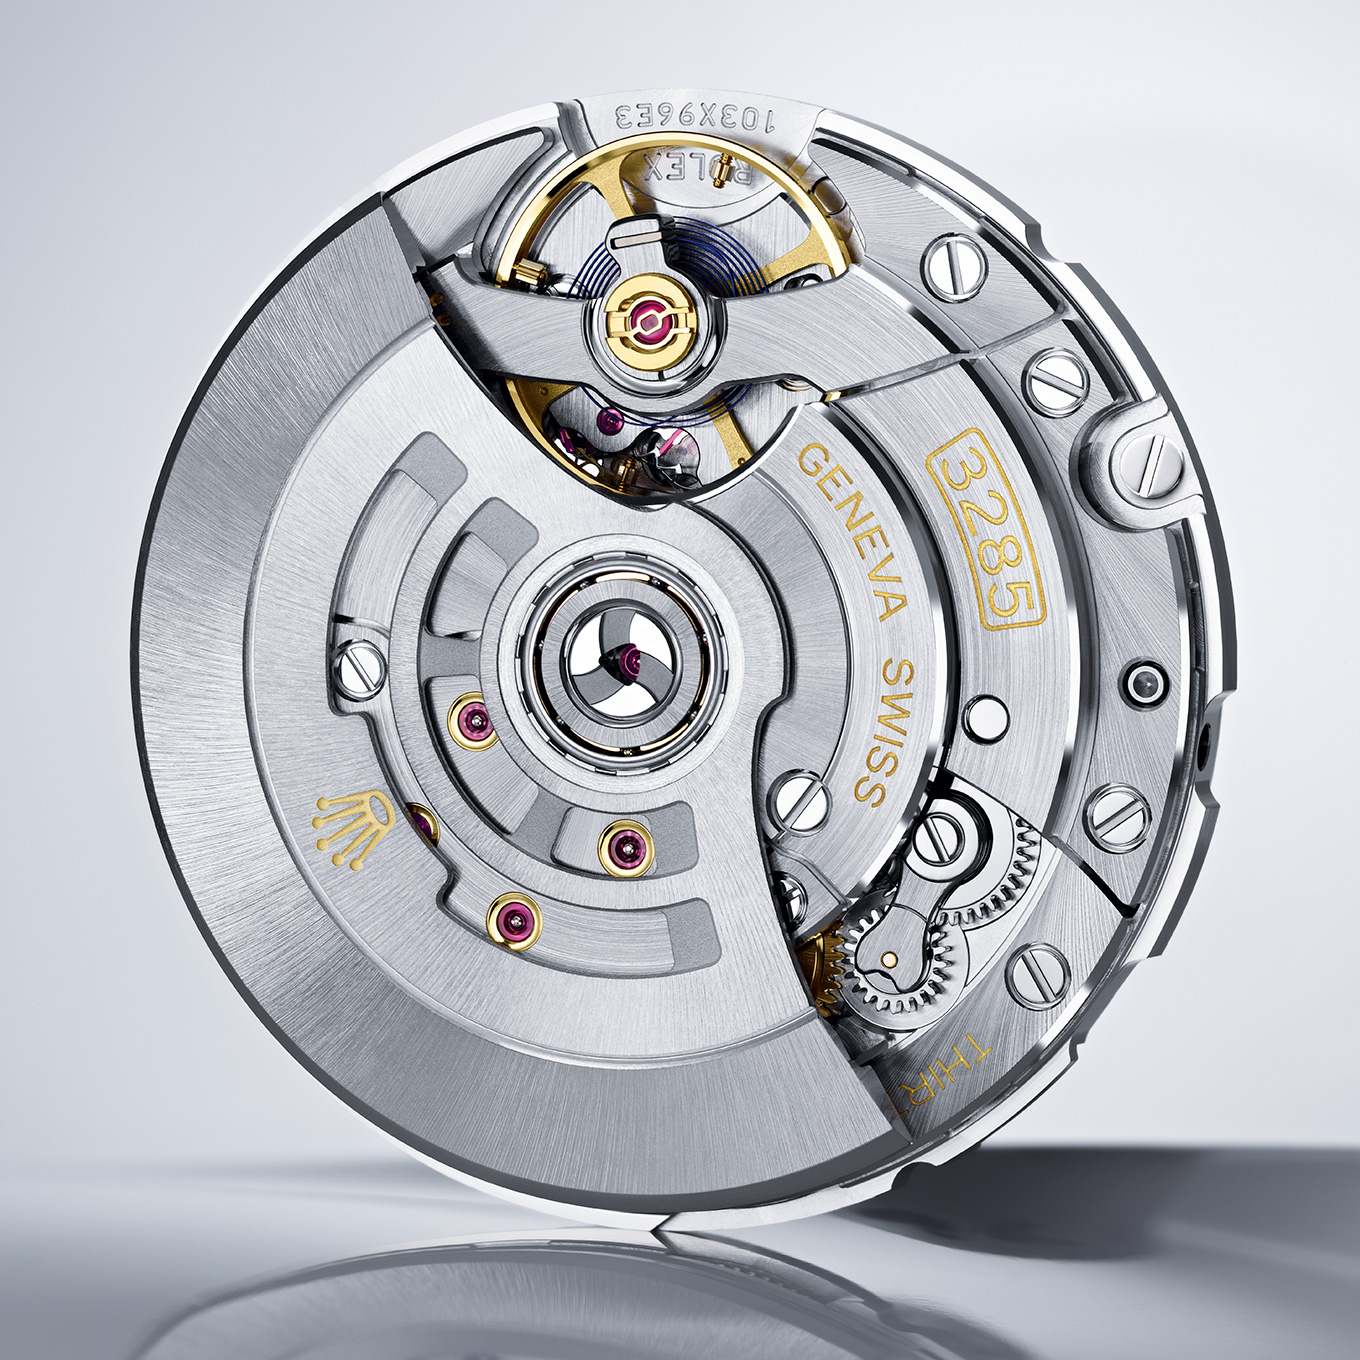 Rolex GMT-Master II - The Cosmopolitan 